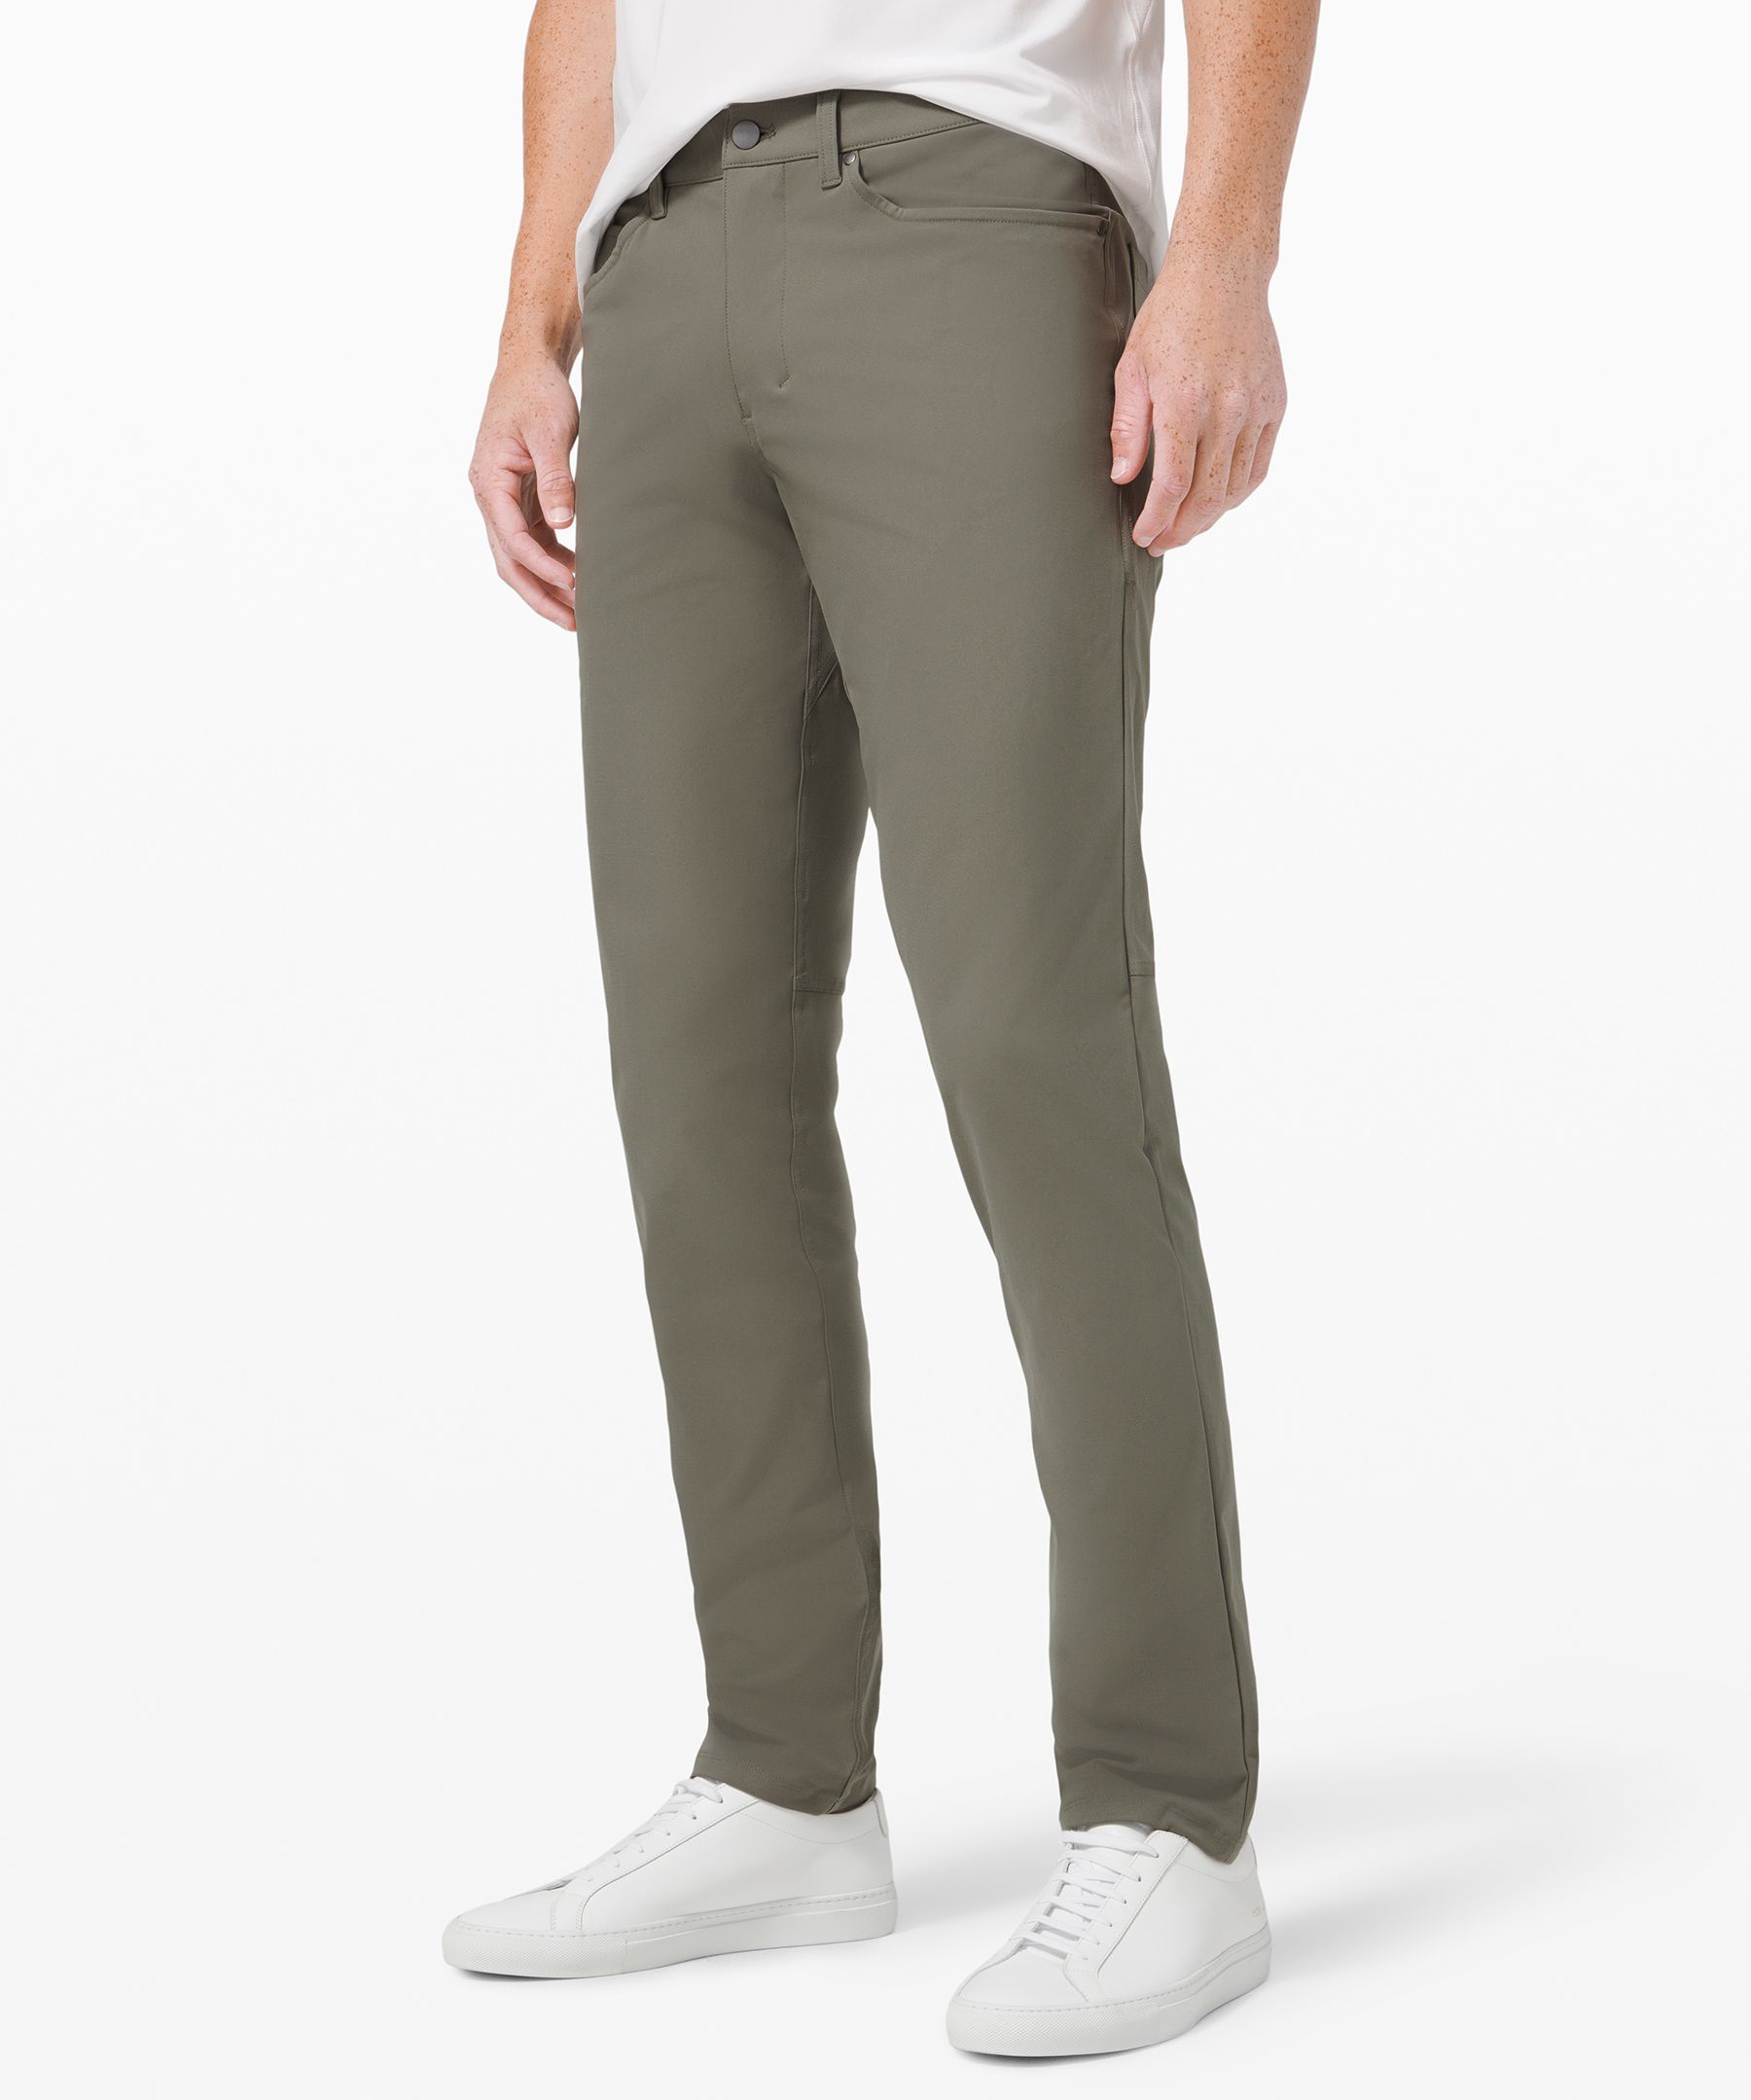 grey lululemon pants